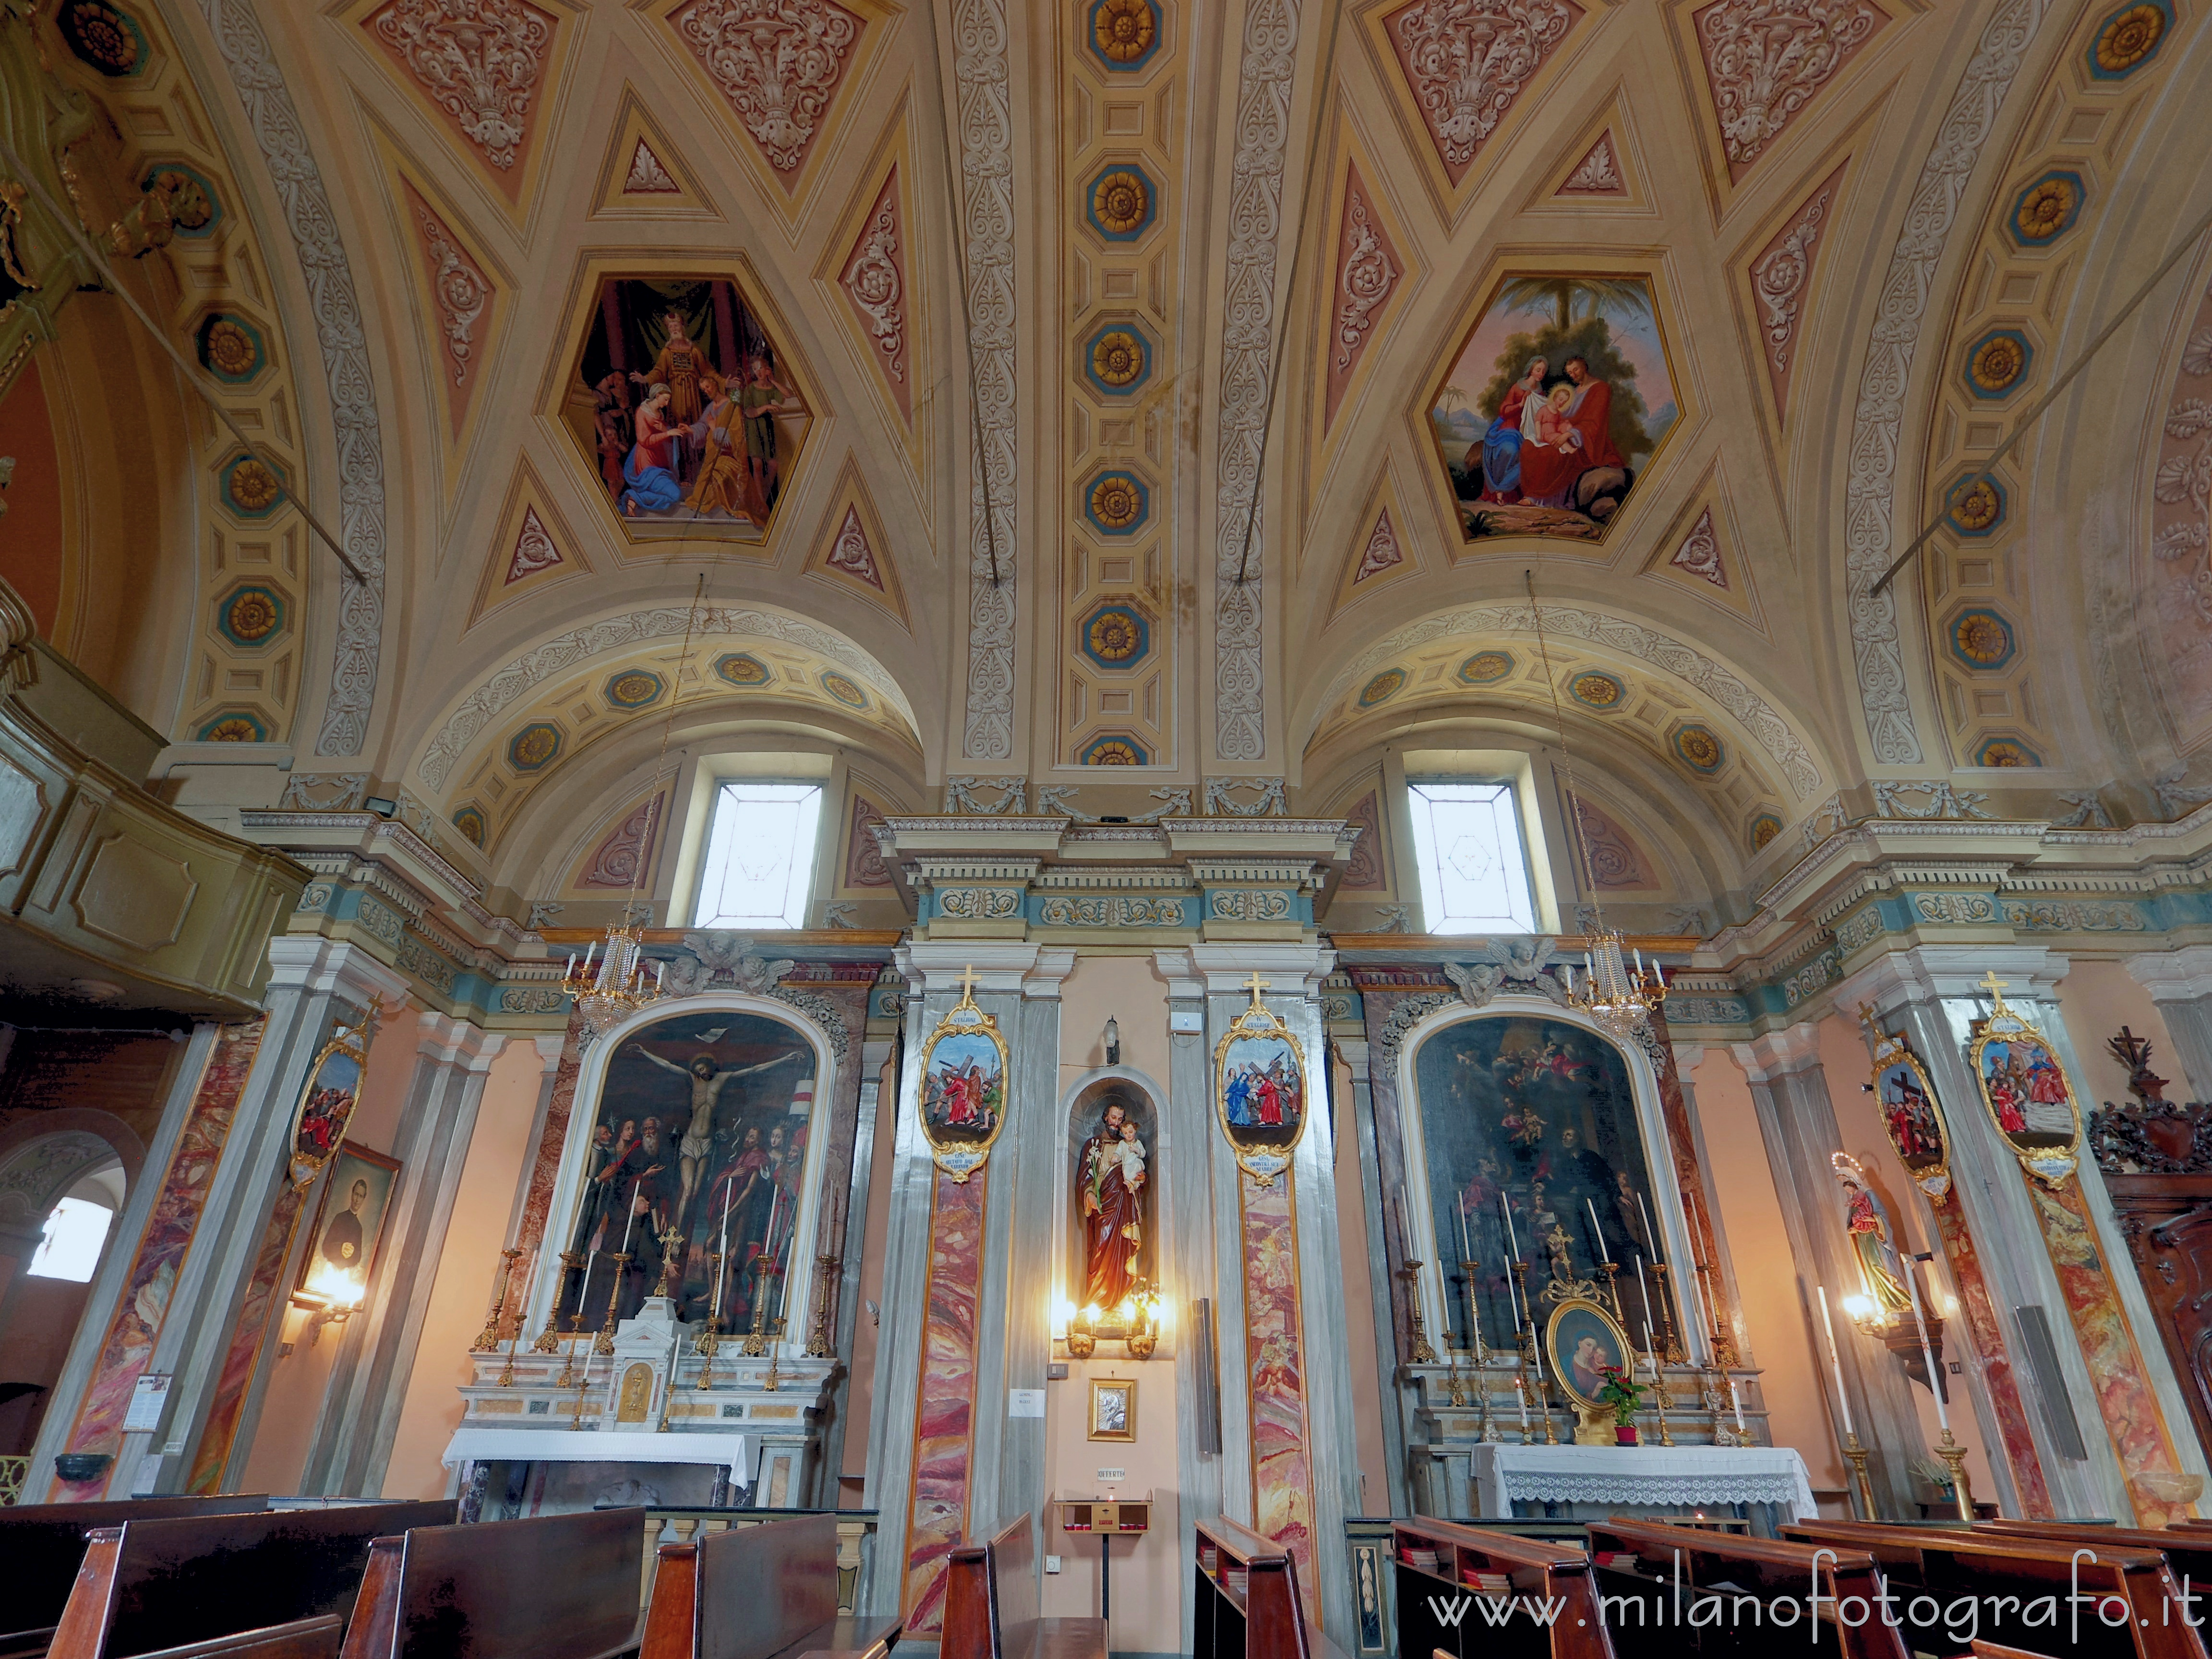 Andorno Micca (Biella, Italy): Left side of the nave of the Church of San Giuseppe di Casto - Andorno Micca (Biella, Italy)